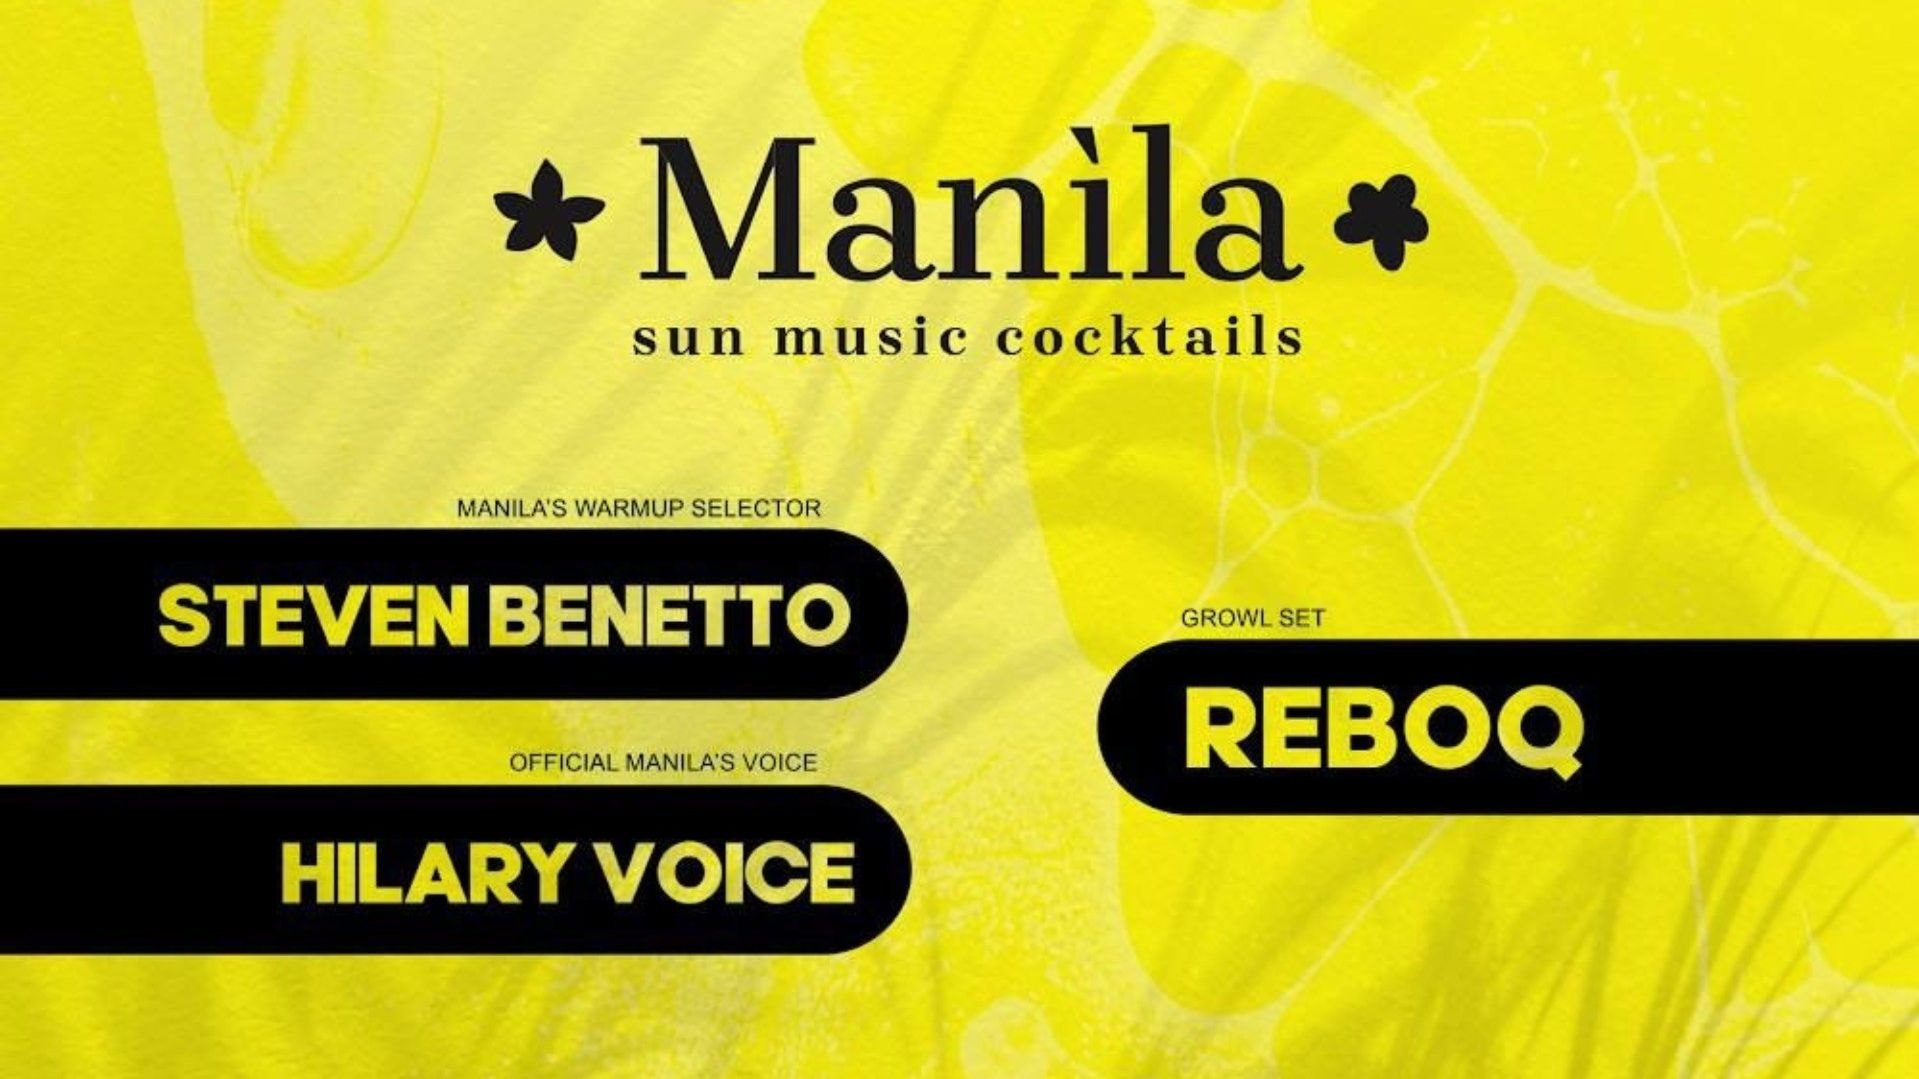 Manìla Sun Music Cocktails